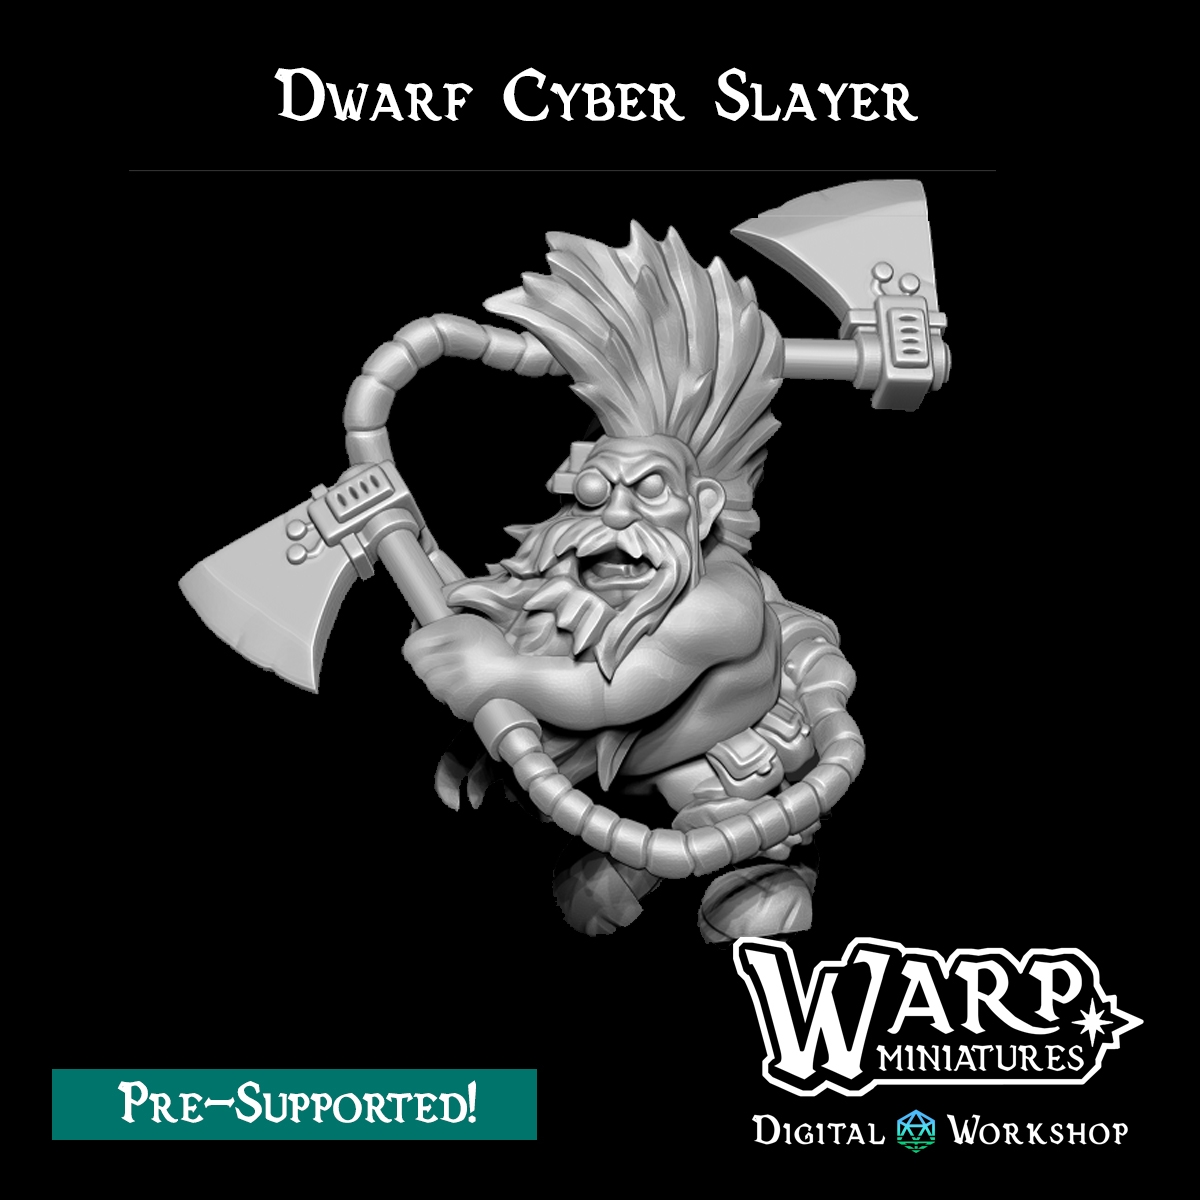 Dwarf Cyber Slayer - Warp Miniatures